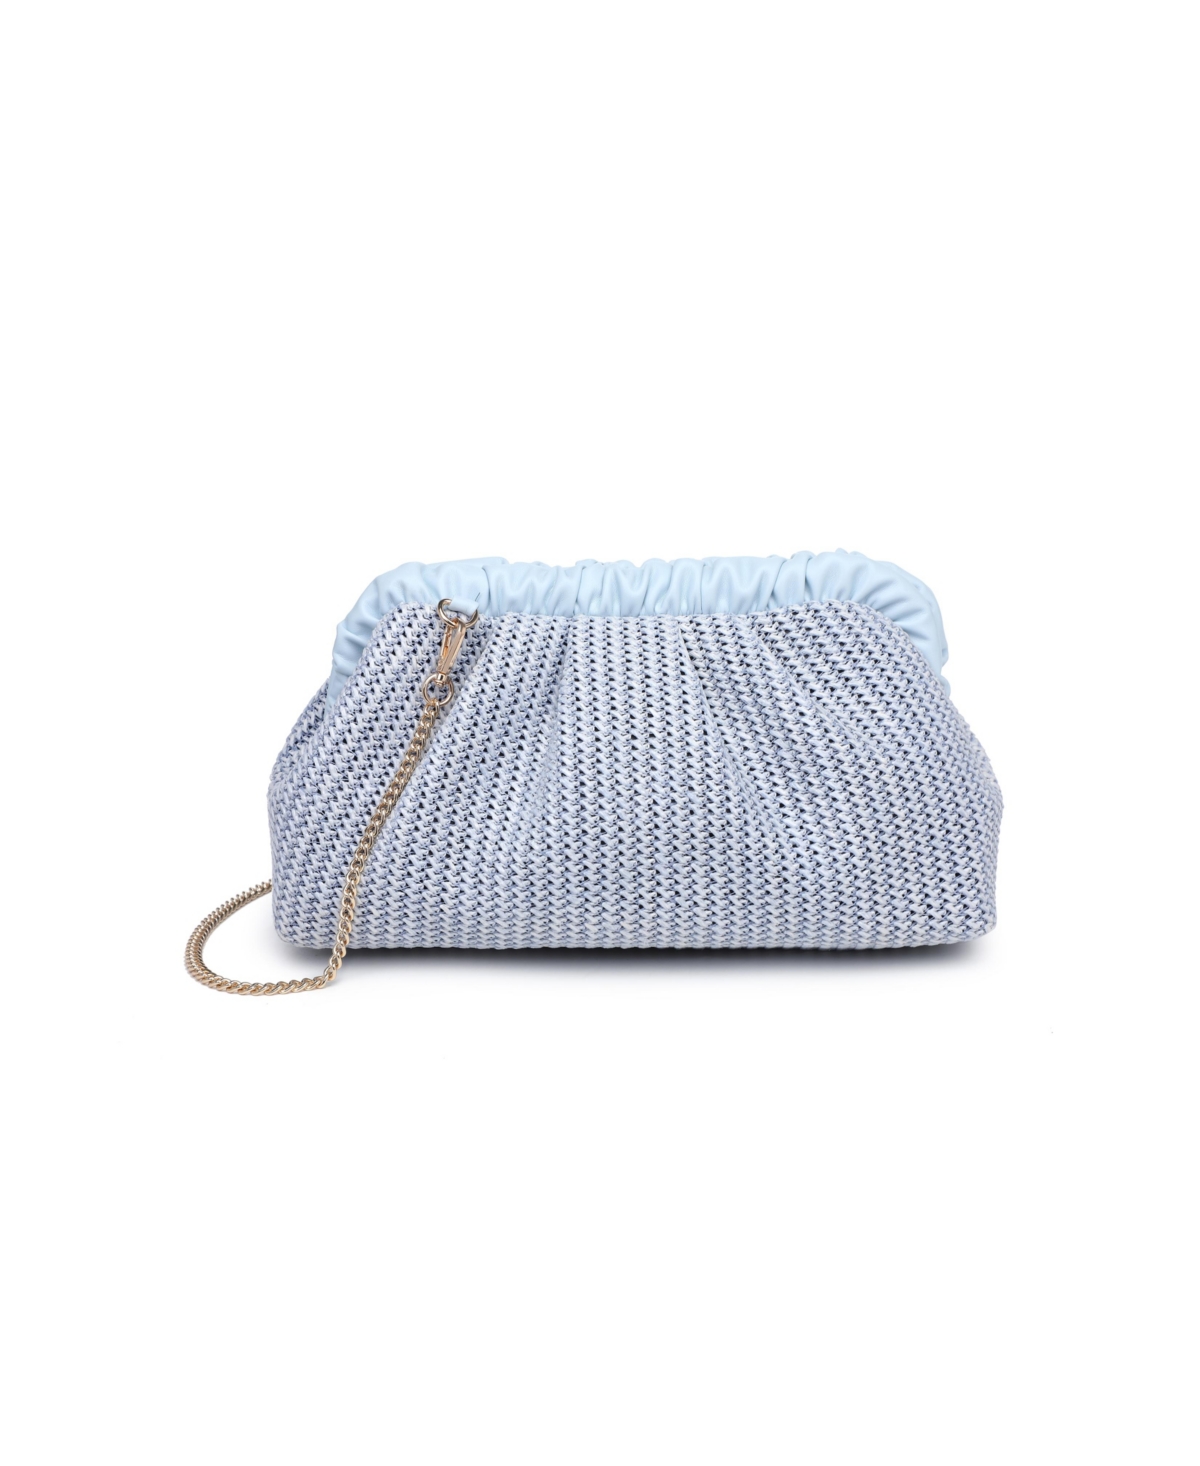 Moda Luxe Delvina Medium Clutch Bag In Denim Multi